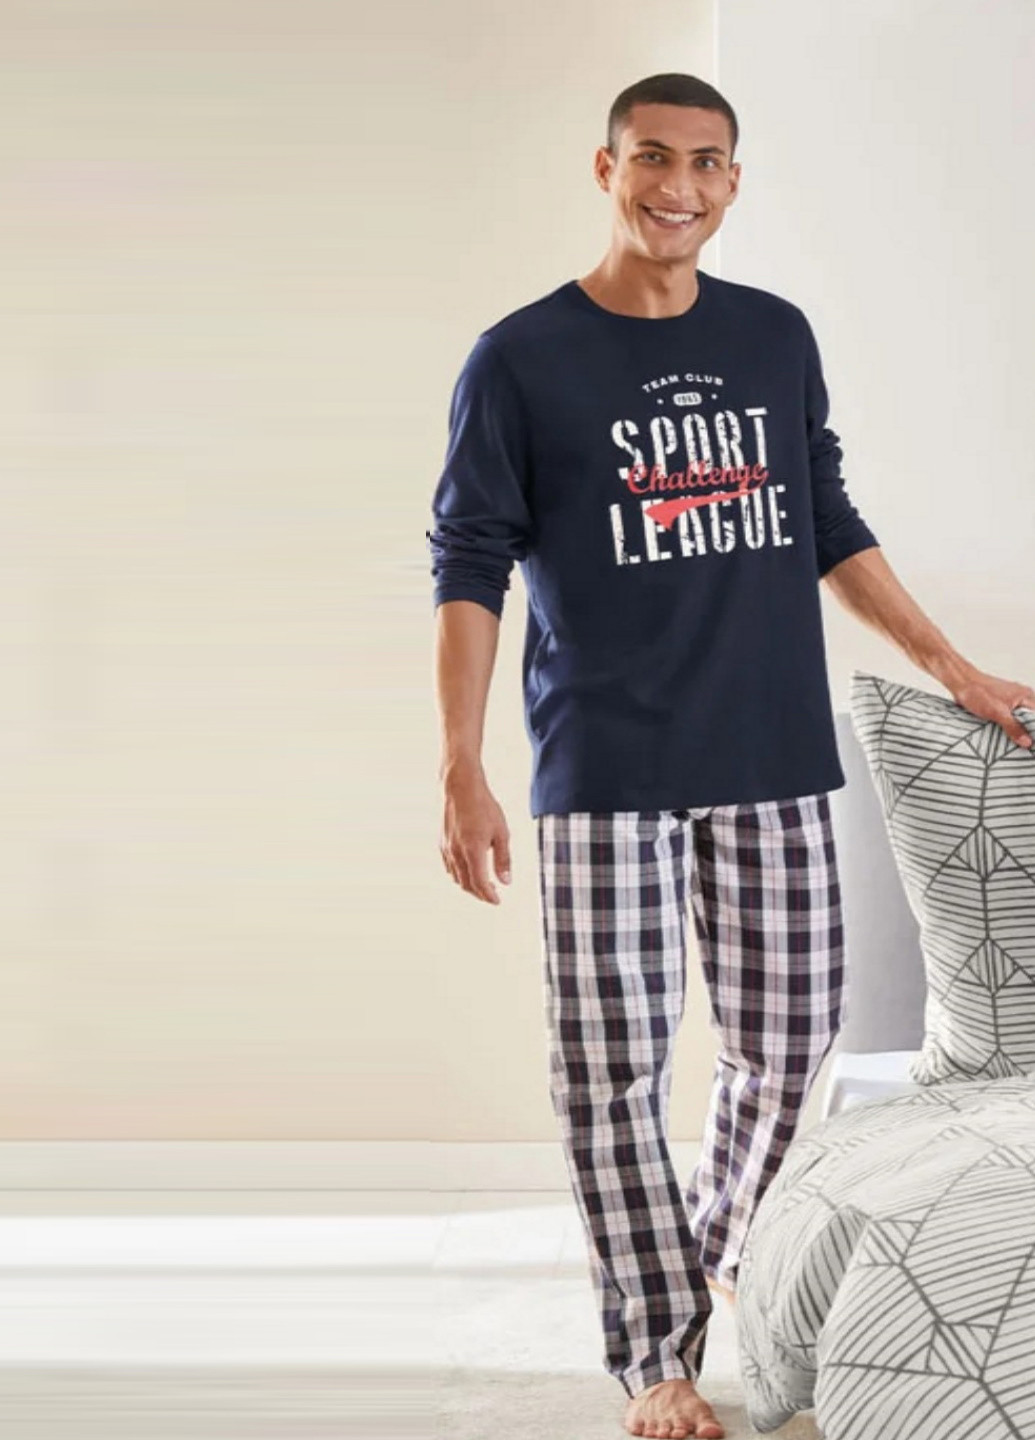 Пижама (лонгслив, брюки) Livergy лонгслив + брюки надпись комбинированная домашняя трикотаж, хлопок